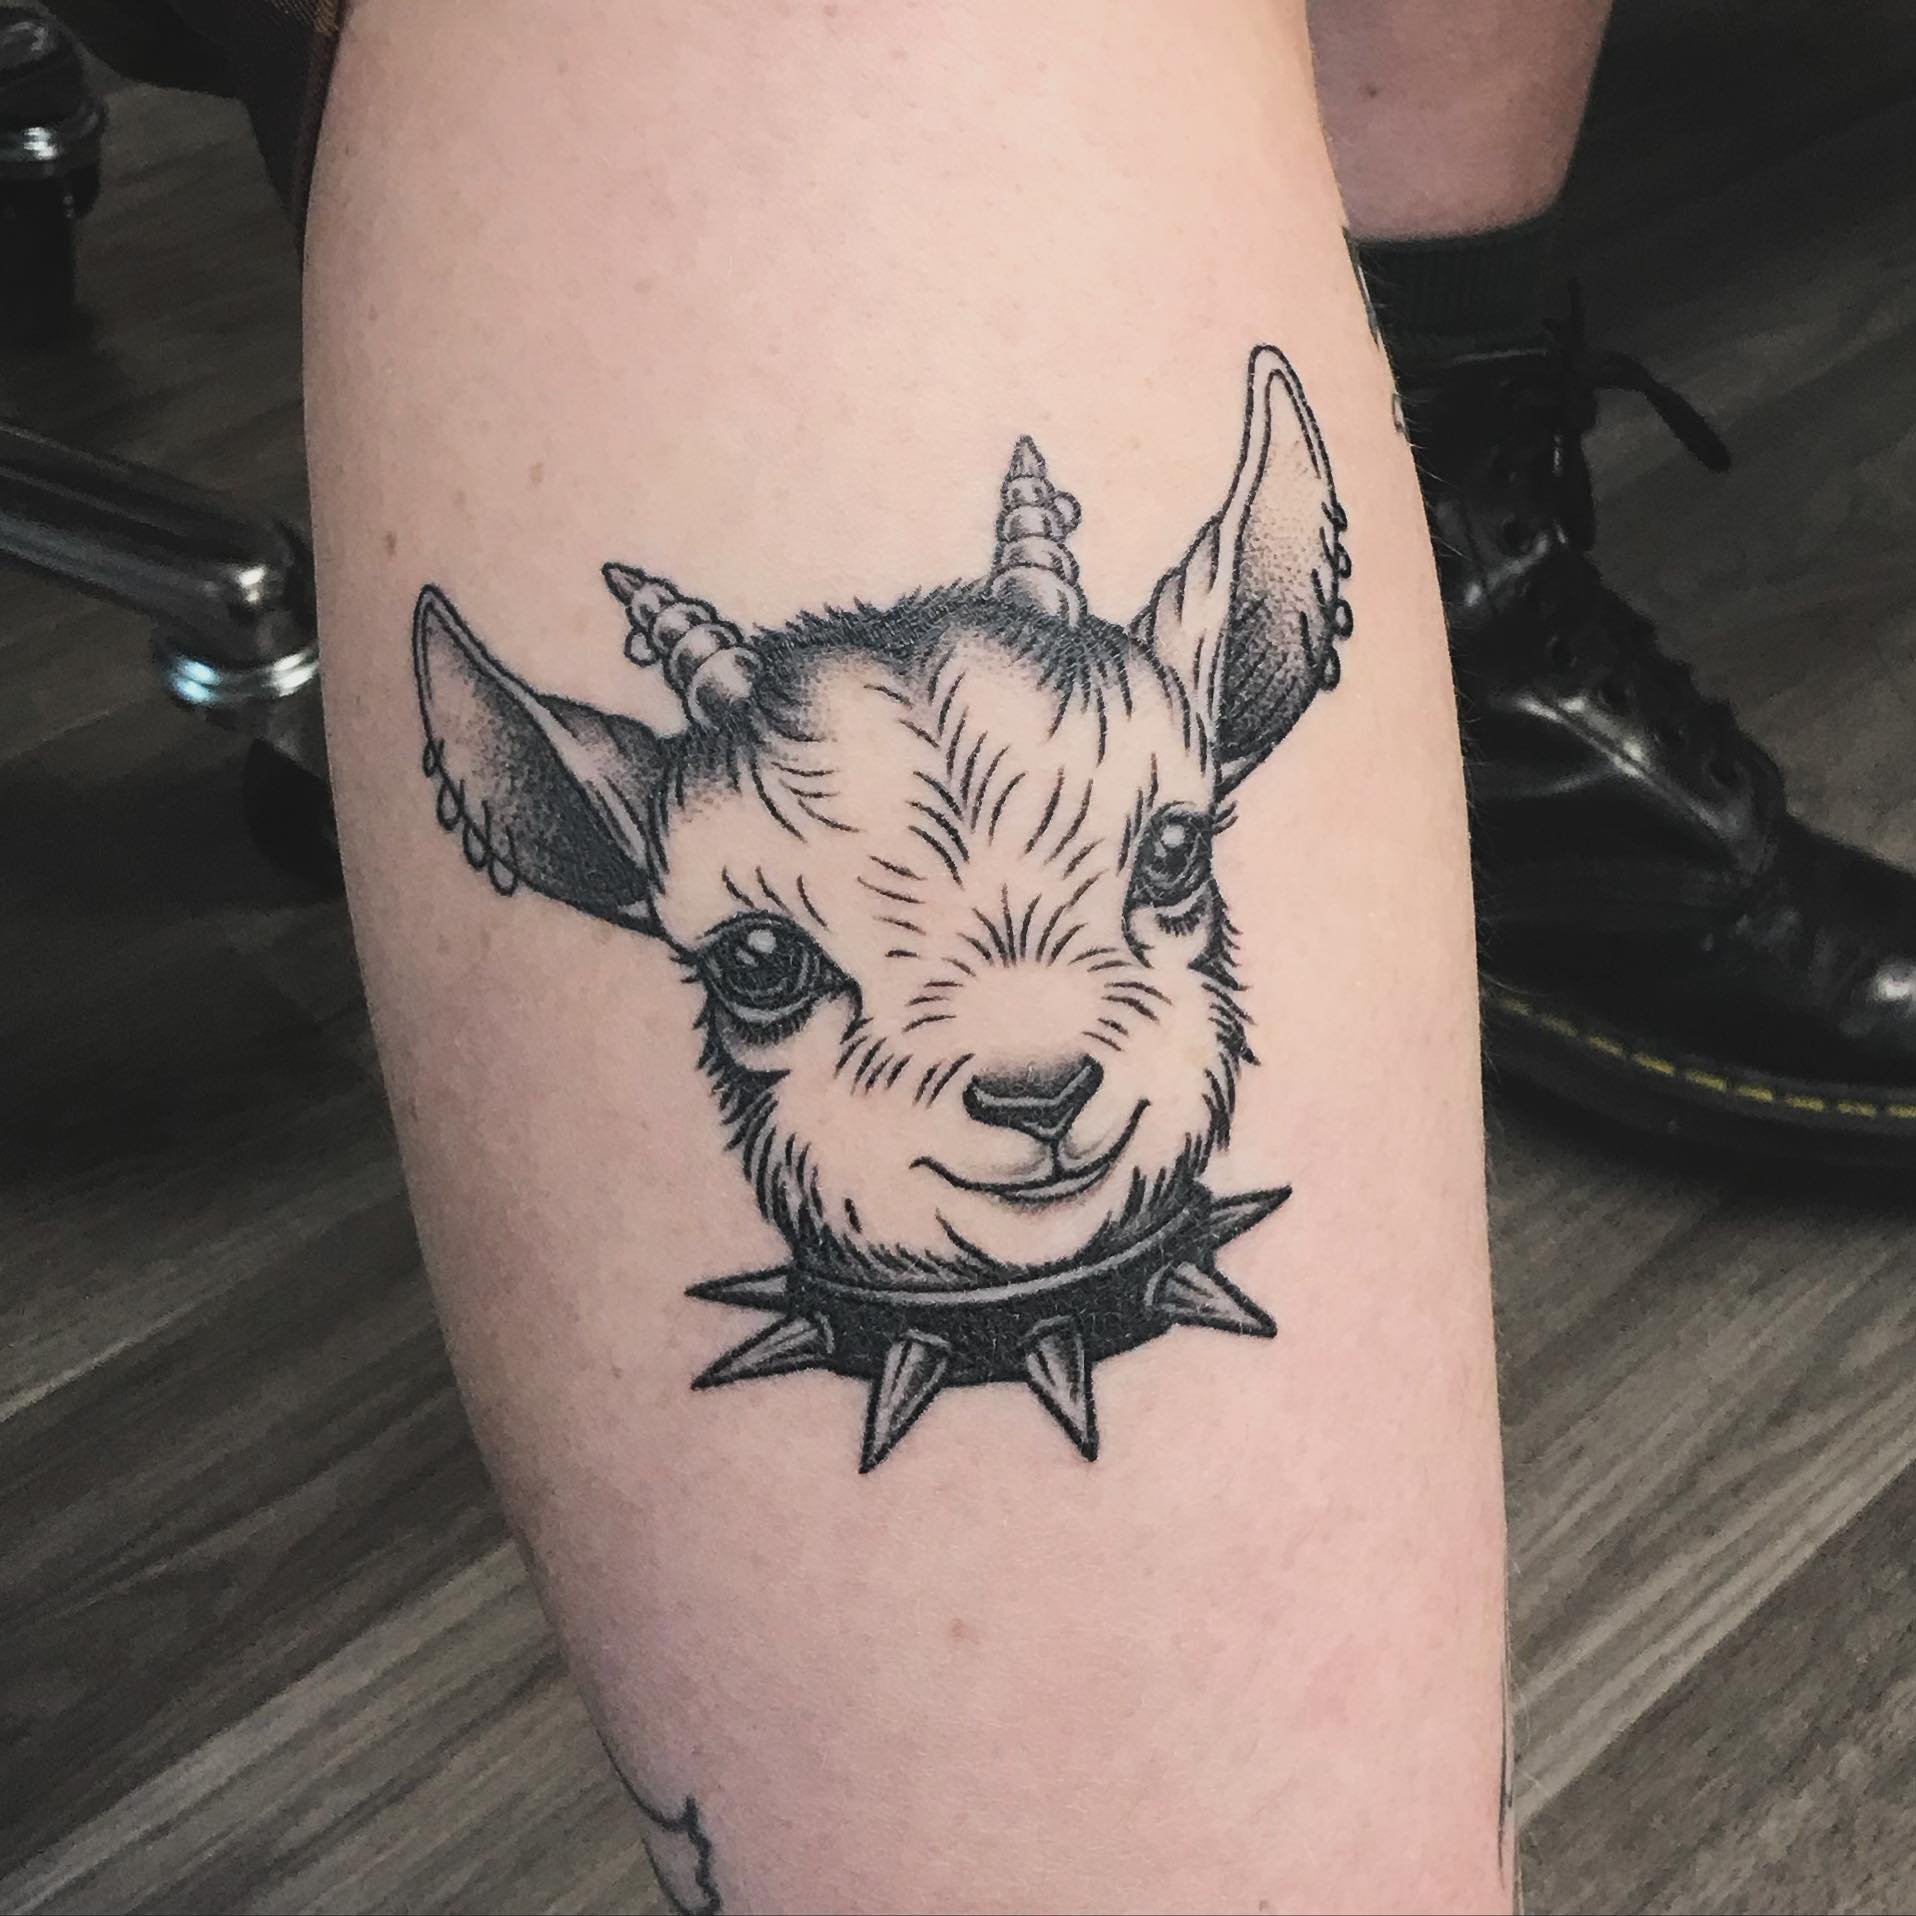 Healed lil goth goat for @mwins666 🐐 
Original art by @an_anast_tattoo 🖤

#melbournetattoo #tattooflash #dynamicink #healedtattoo #calftattoo #blackinktattoo #melbournetattooist